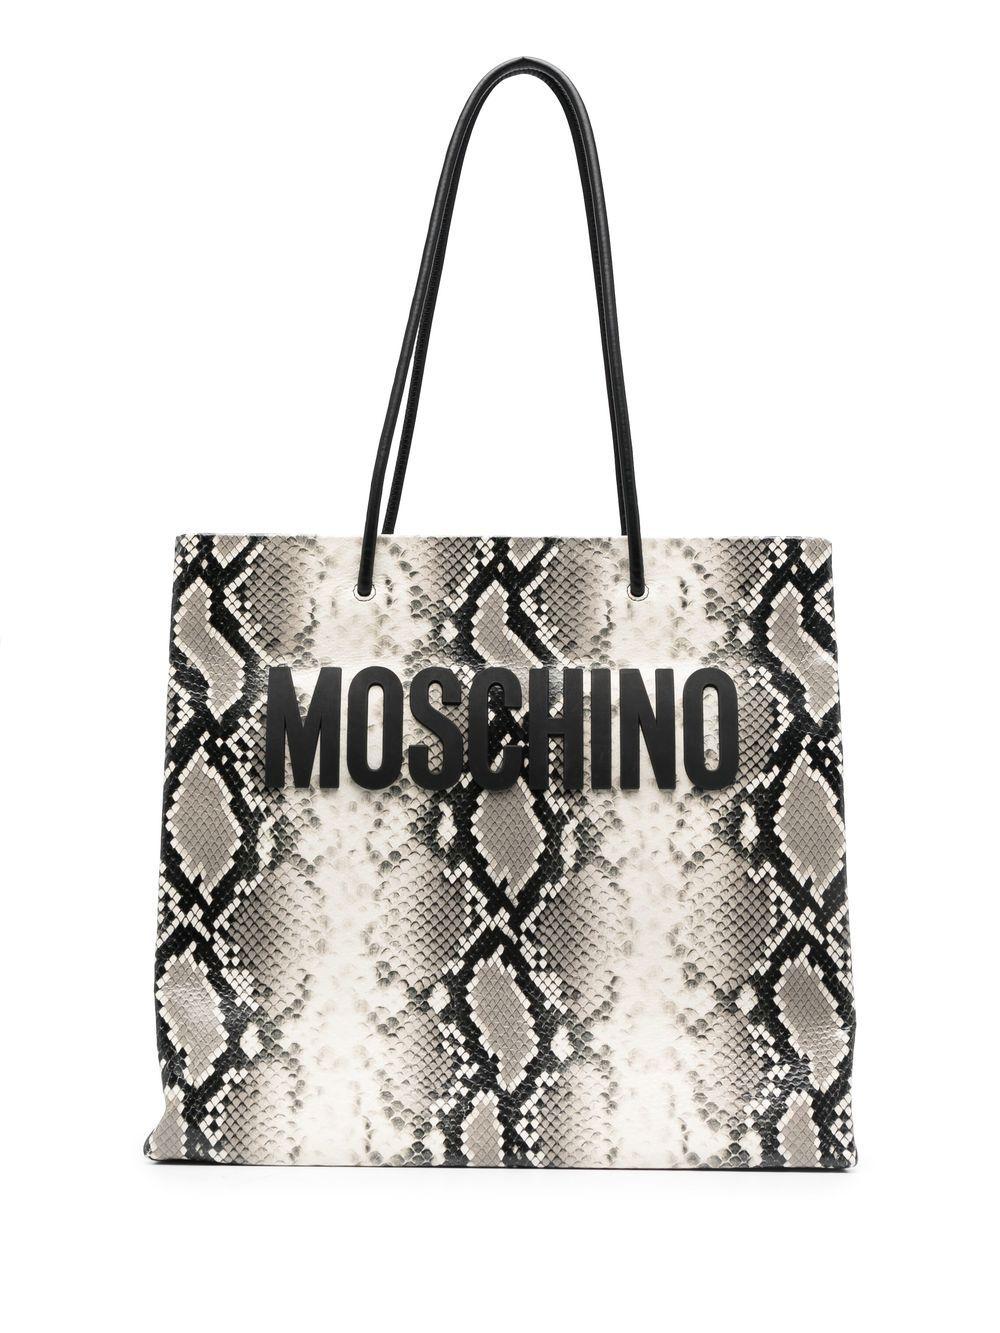 Moschino Snakeskin Print Shoulder Bag in Black | Lyst